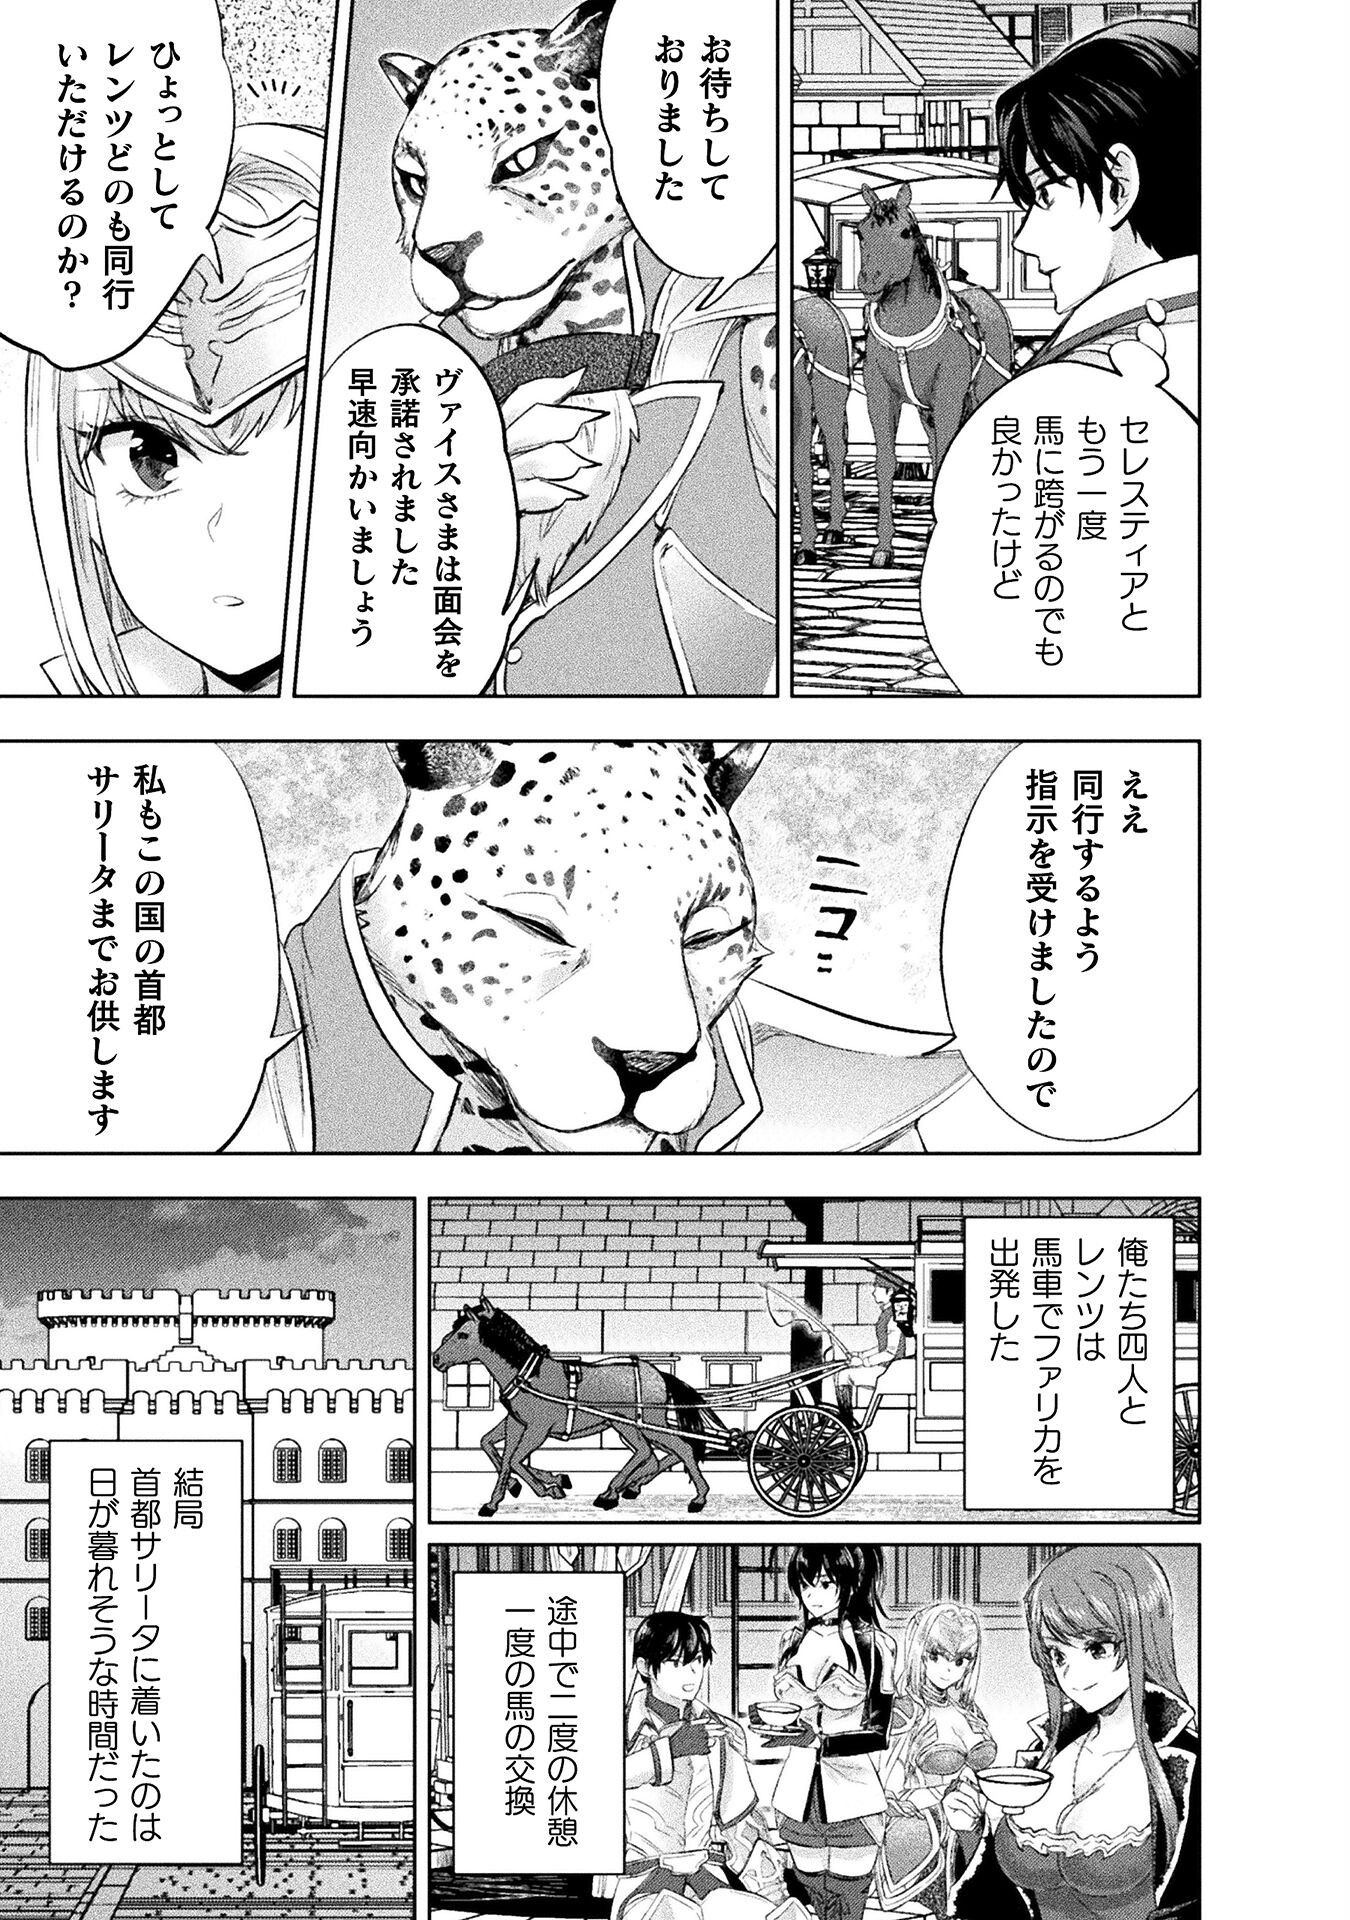 Bijo to Kenja to Majin no Ken - Chapter 31 - Page 27